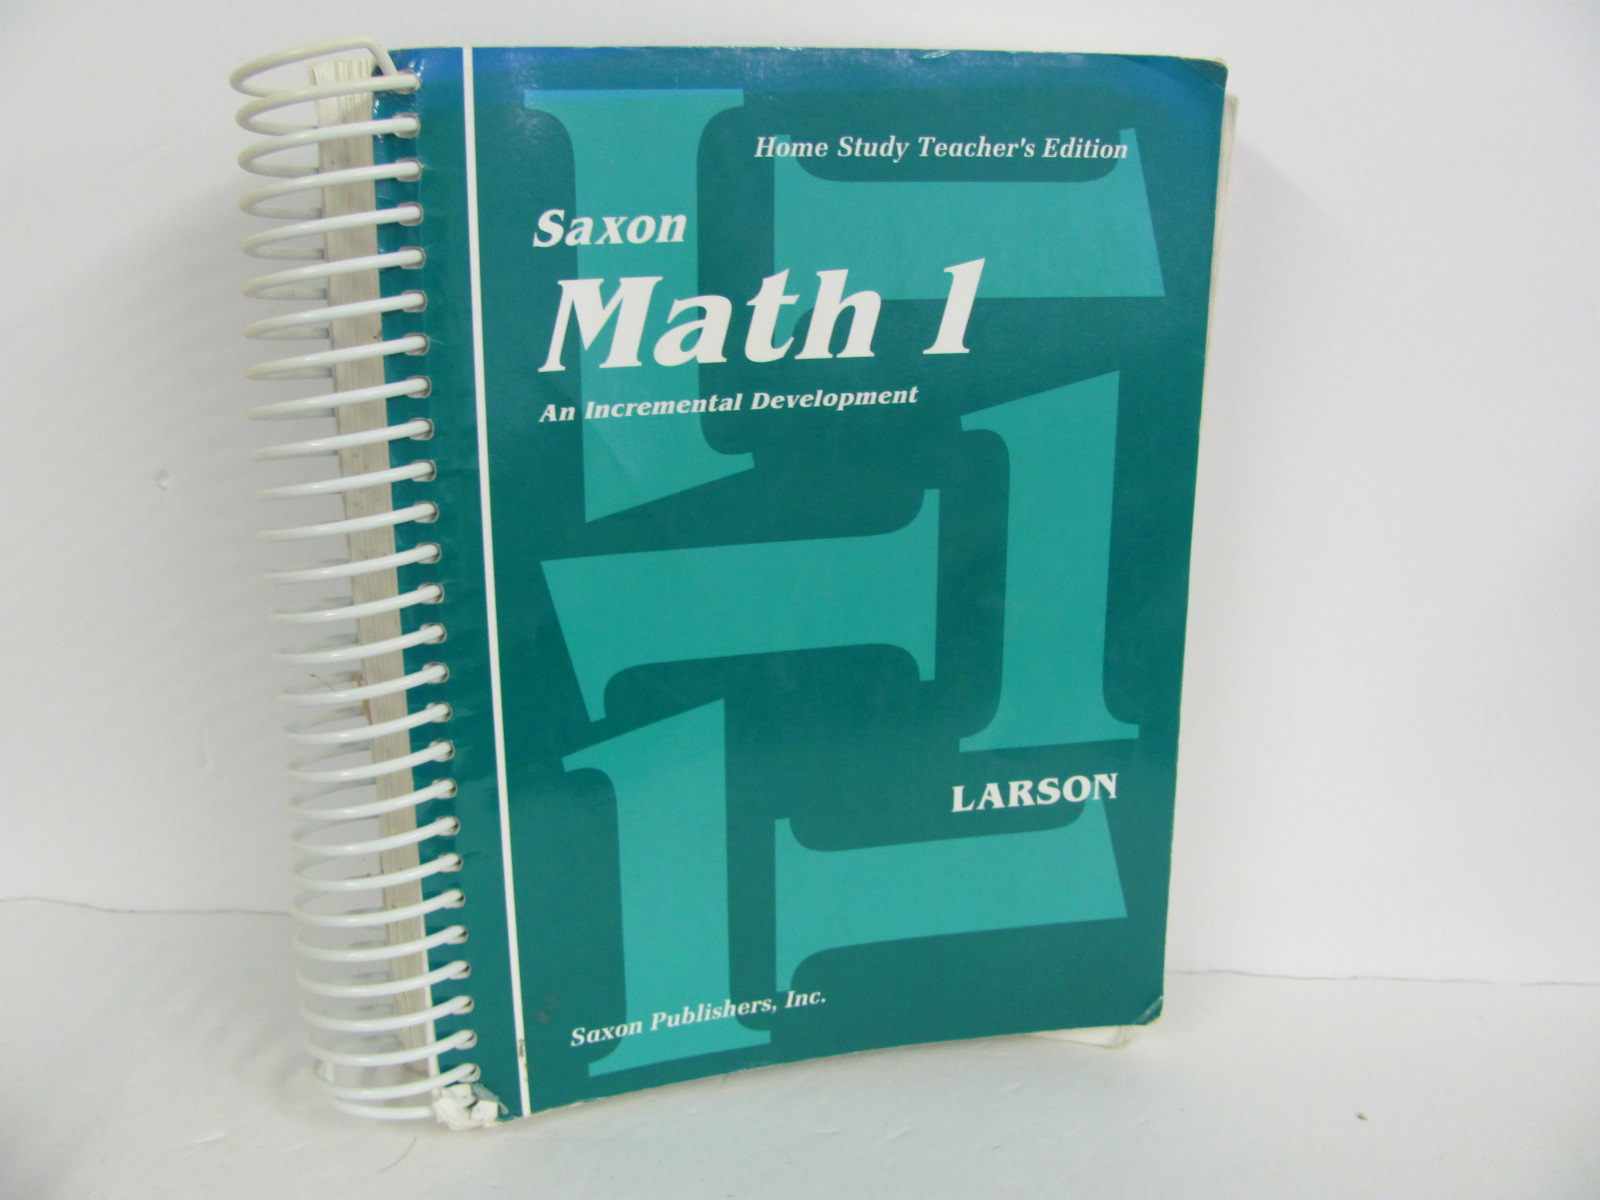 Math-1-Saxon-Teacher-Edition-Used-1st-Grade-Mathematics-Mathematics_334860A.jpg